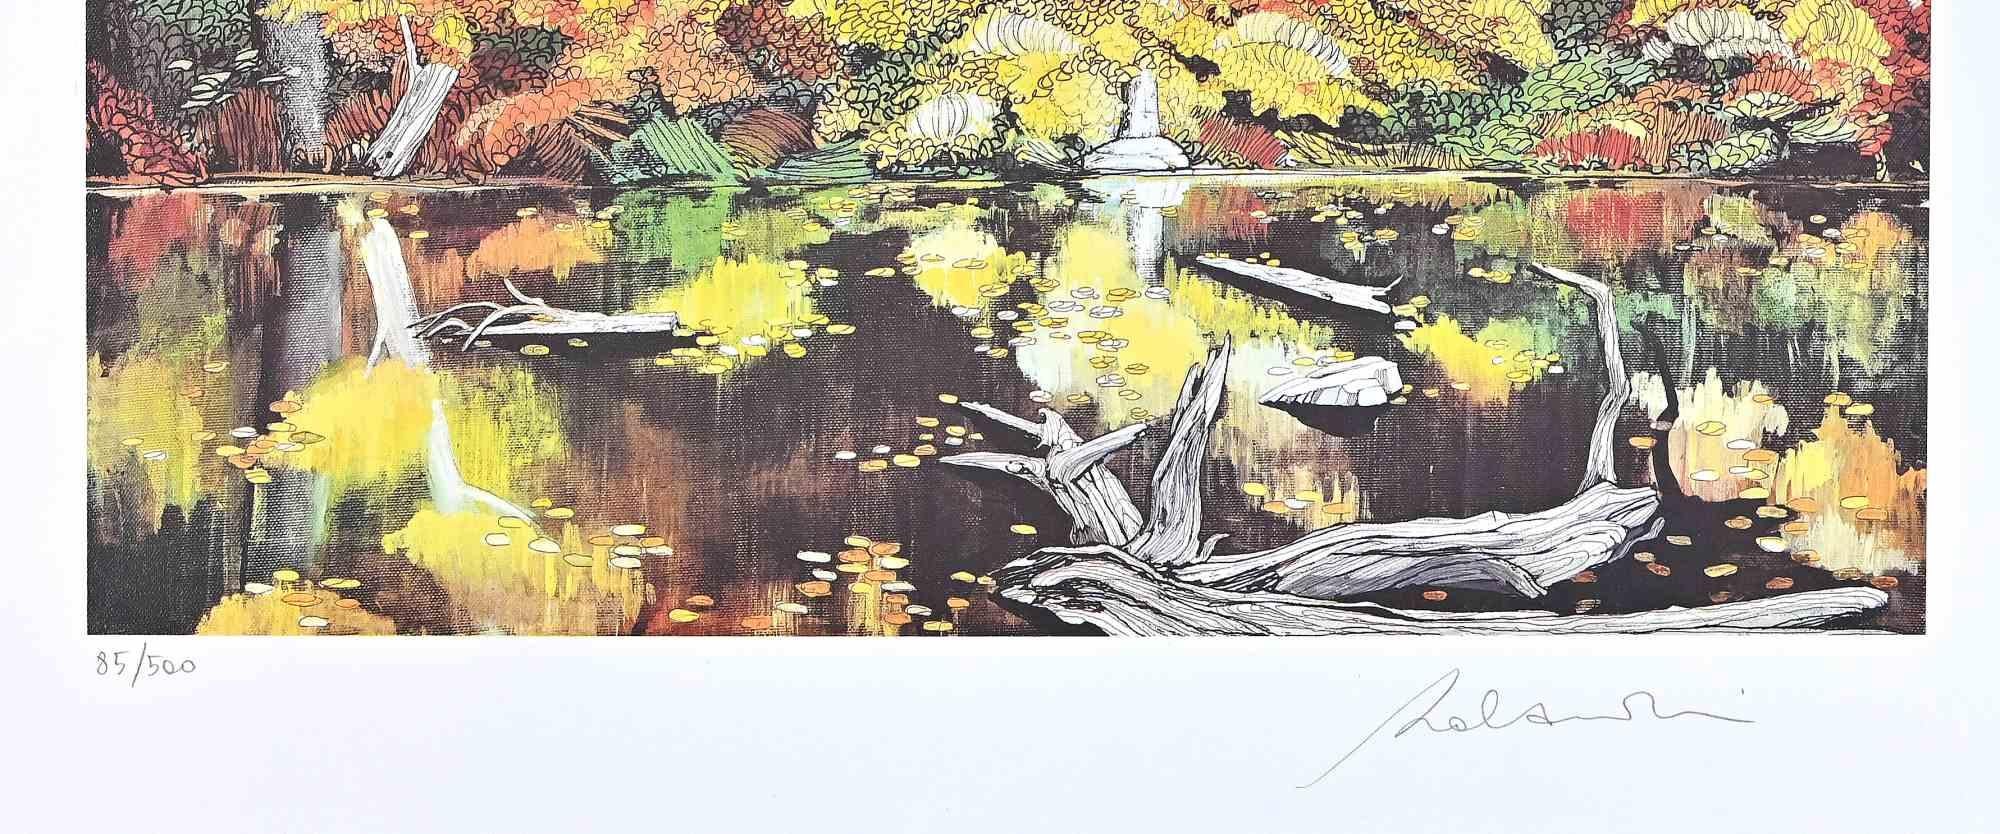 Beside The Lake - Screen Print by Rolandi - 1980s - Brown Landscape Print by Rolandi (Maurizio Coccia)